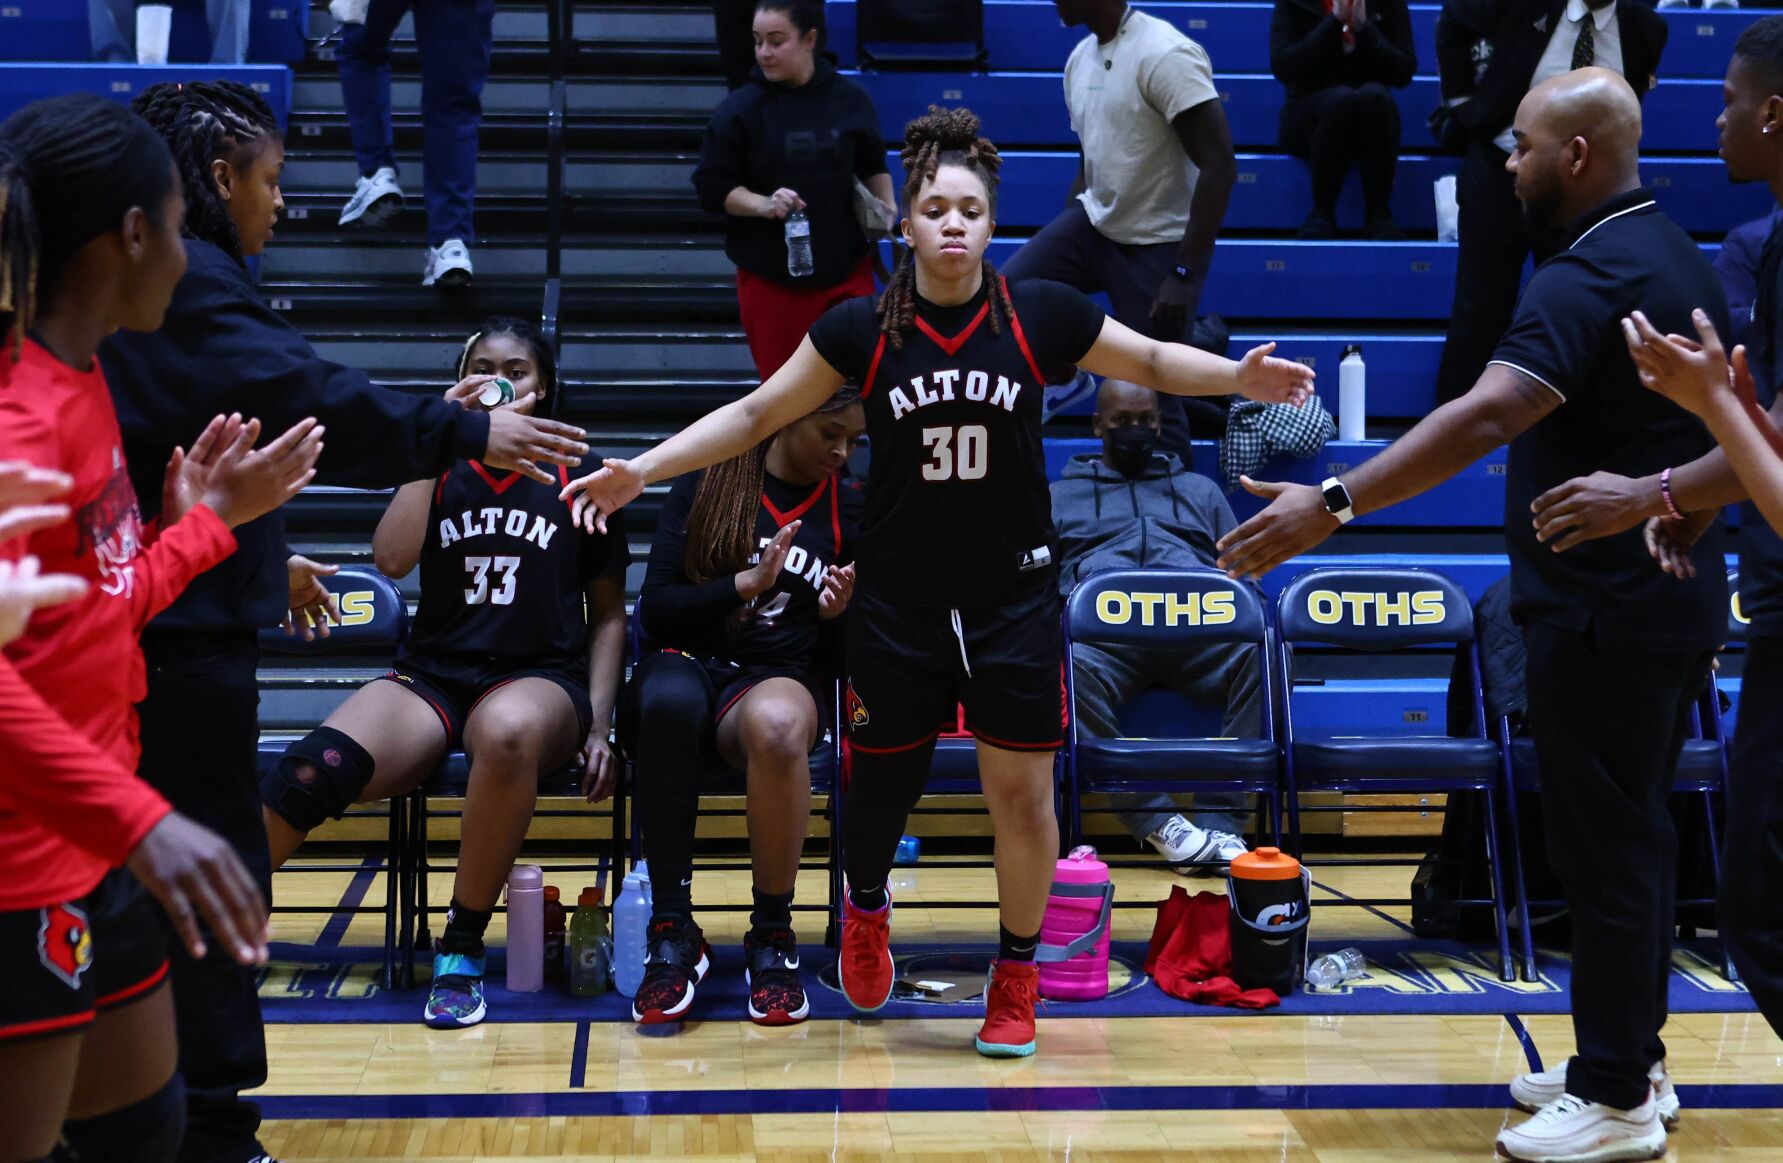 Alyssa Lewis Leads Alton High to Victory in Intense Girls Basketball Showdown